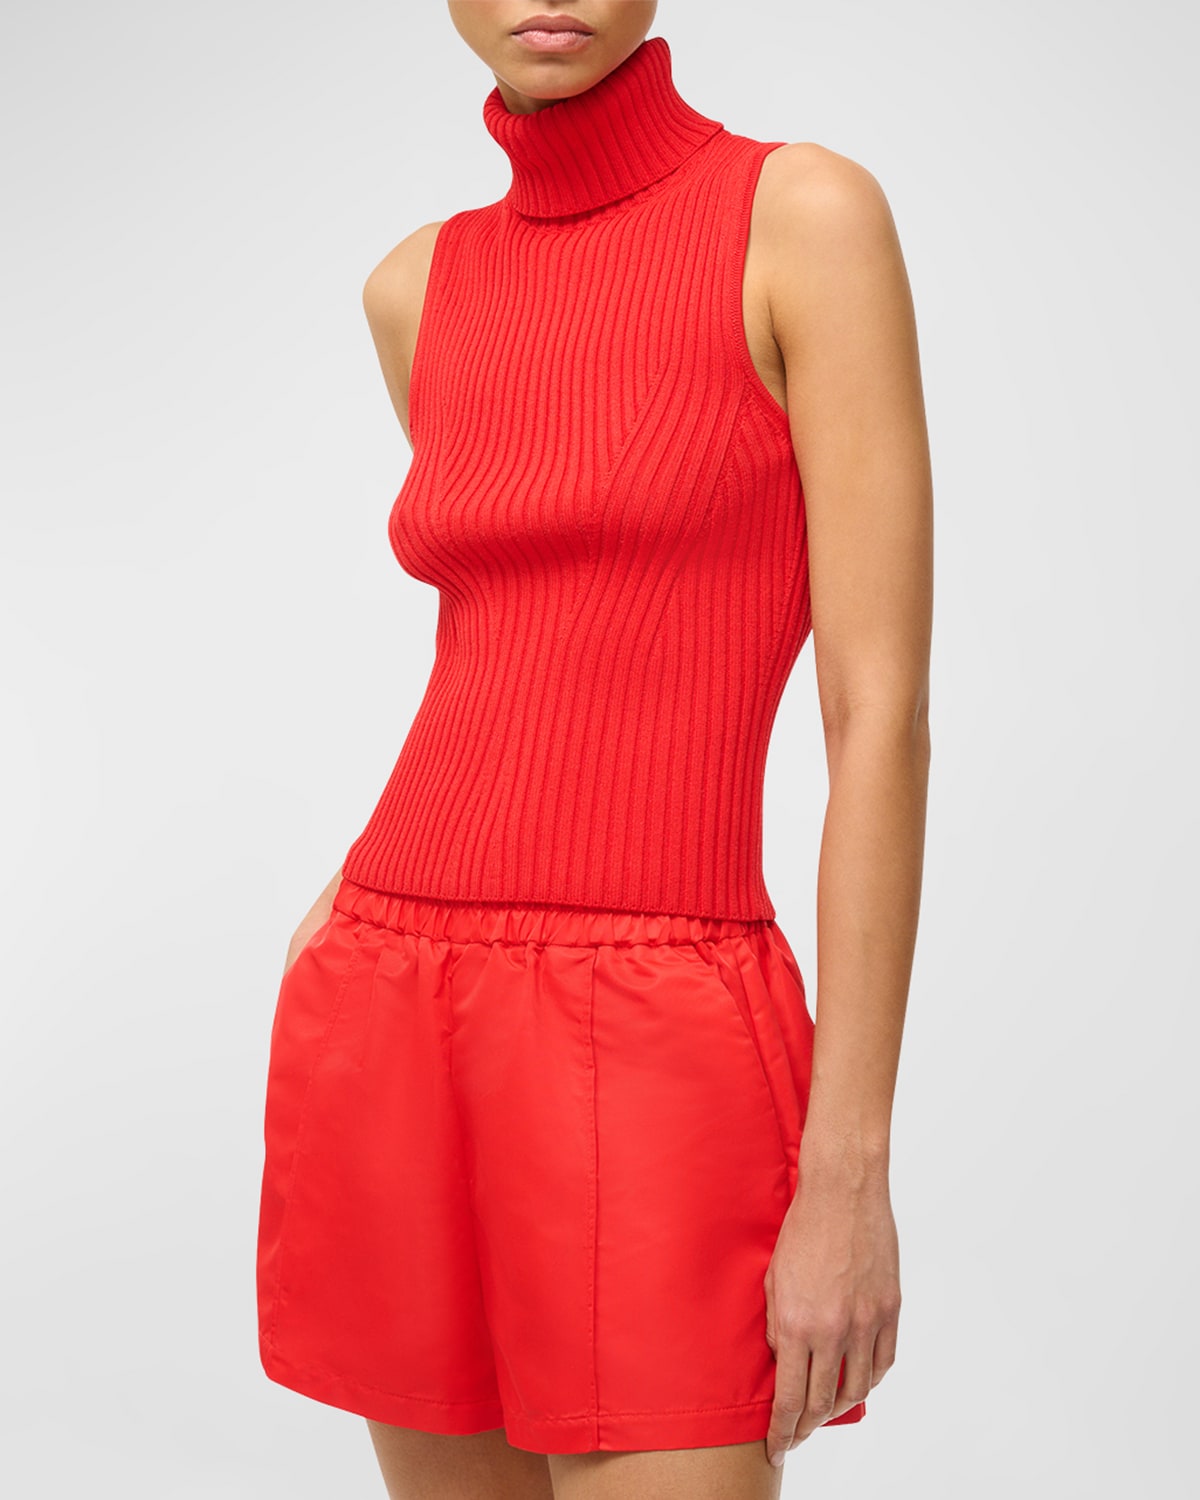 Staud Callum Sleeveless Turtleneck Knit Top In Red